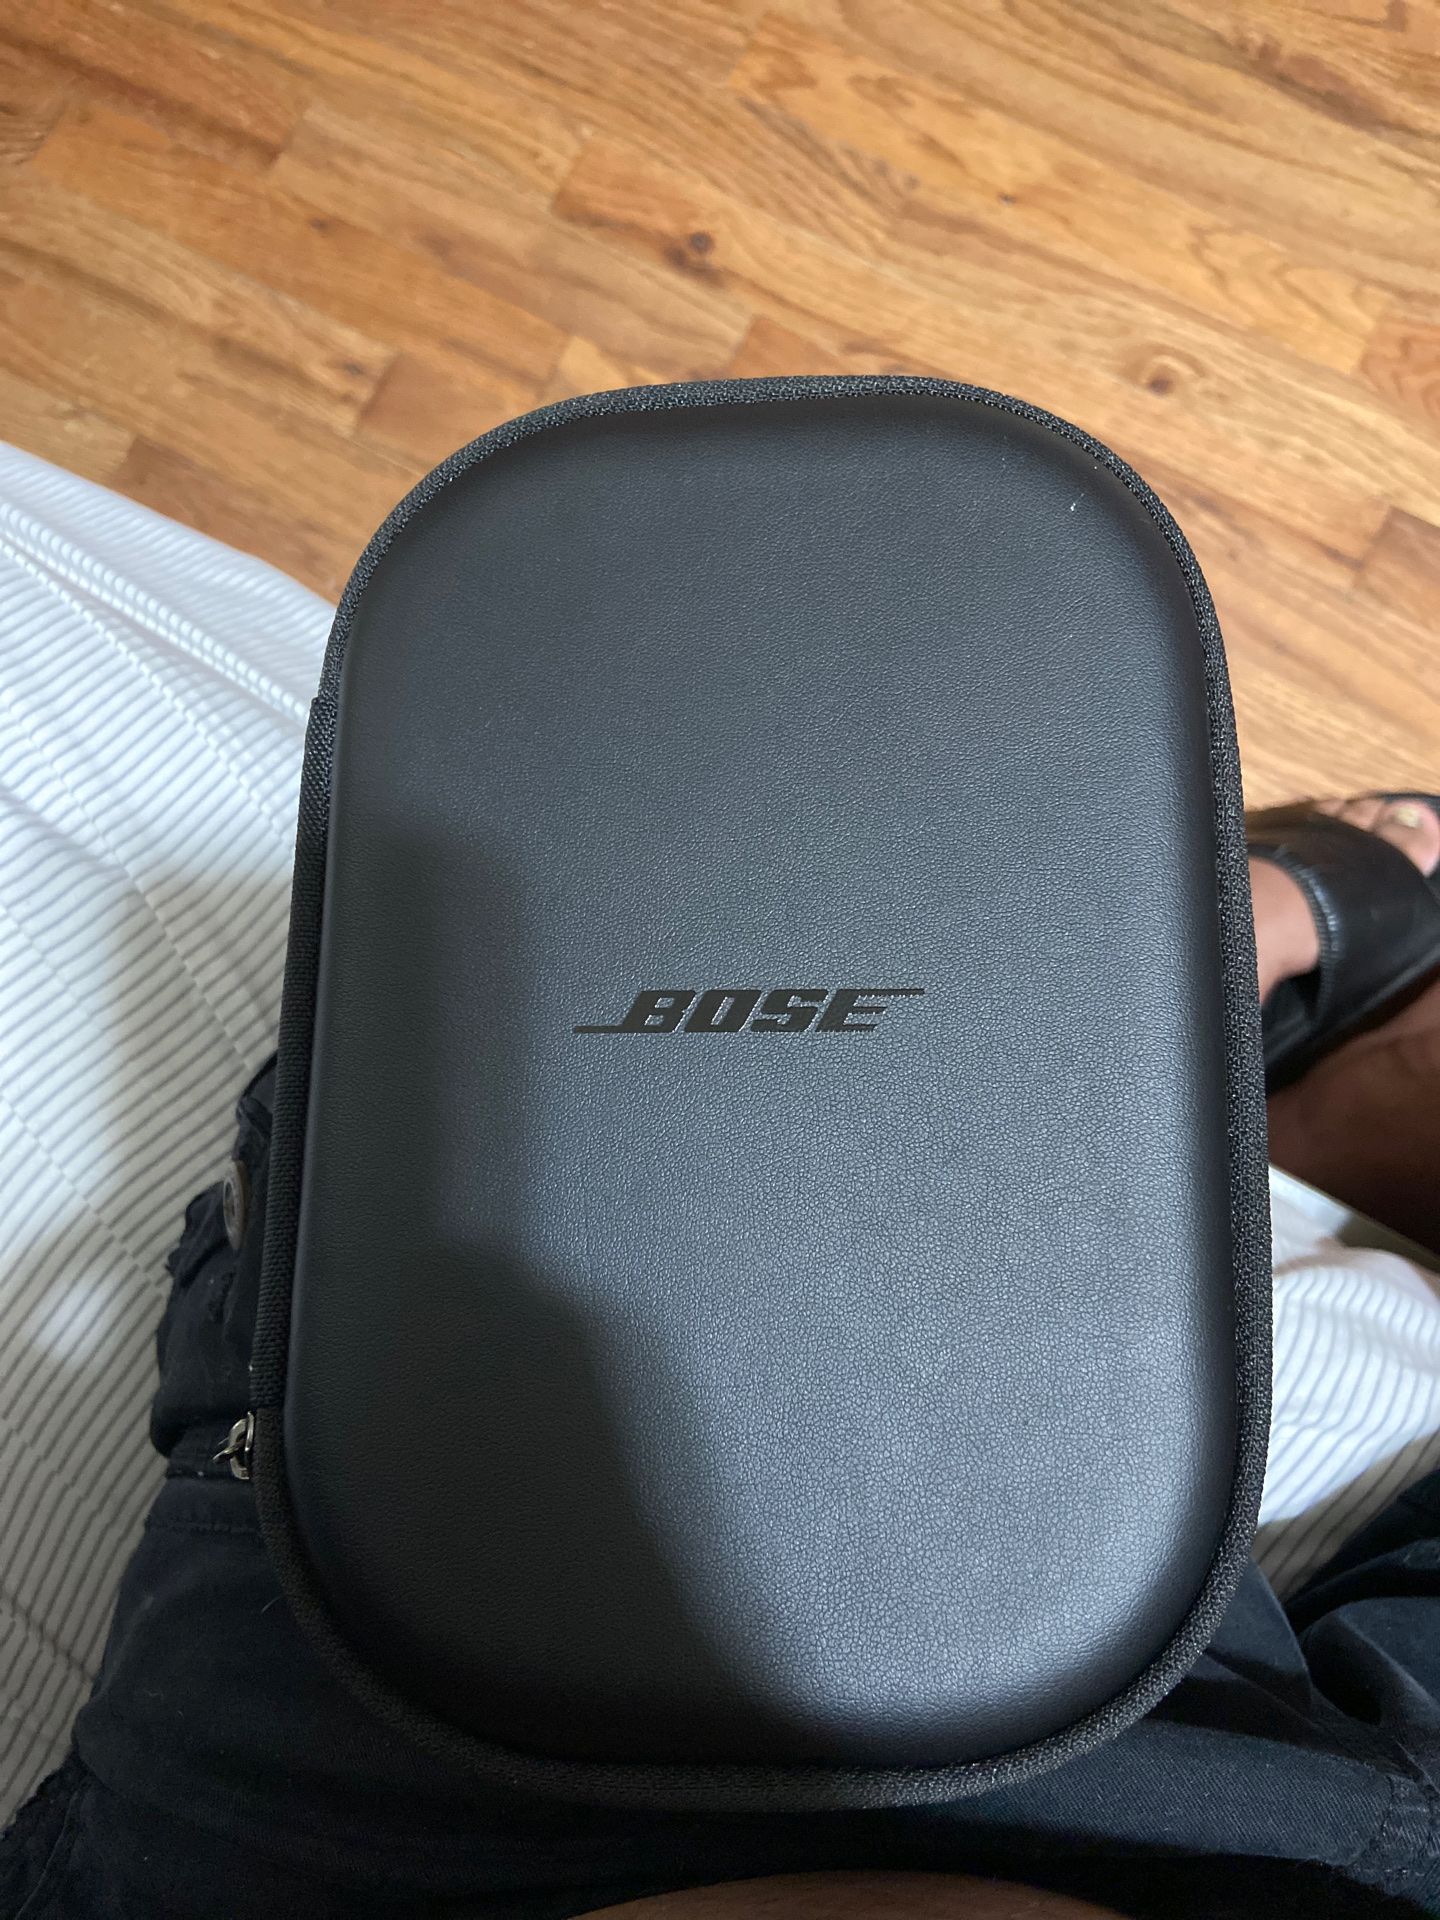 Bose noise-canceling headphones